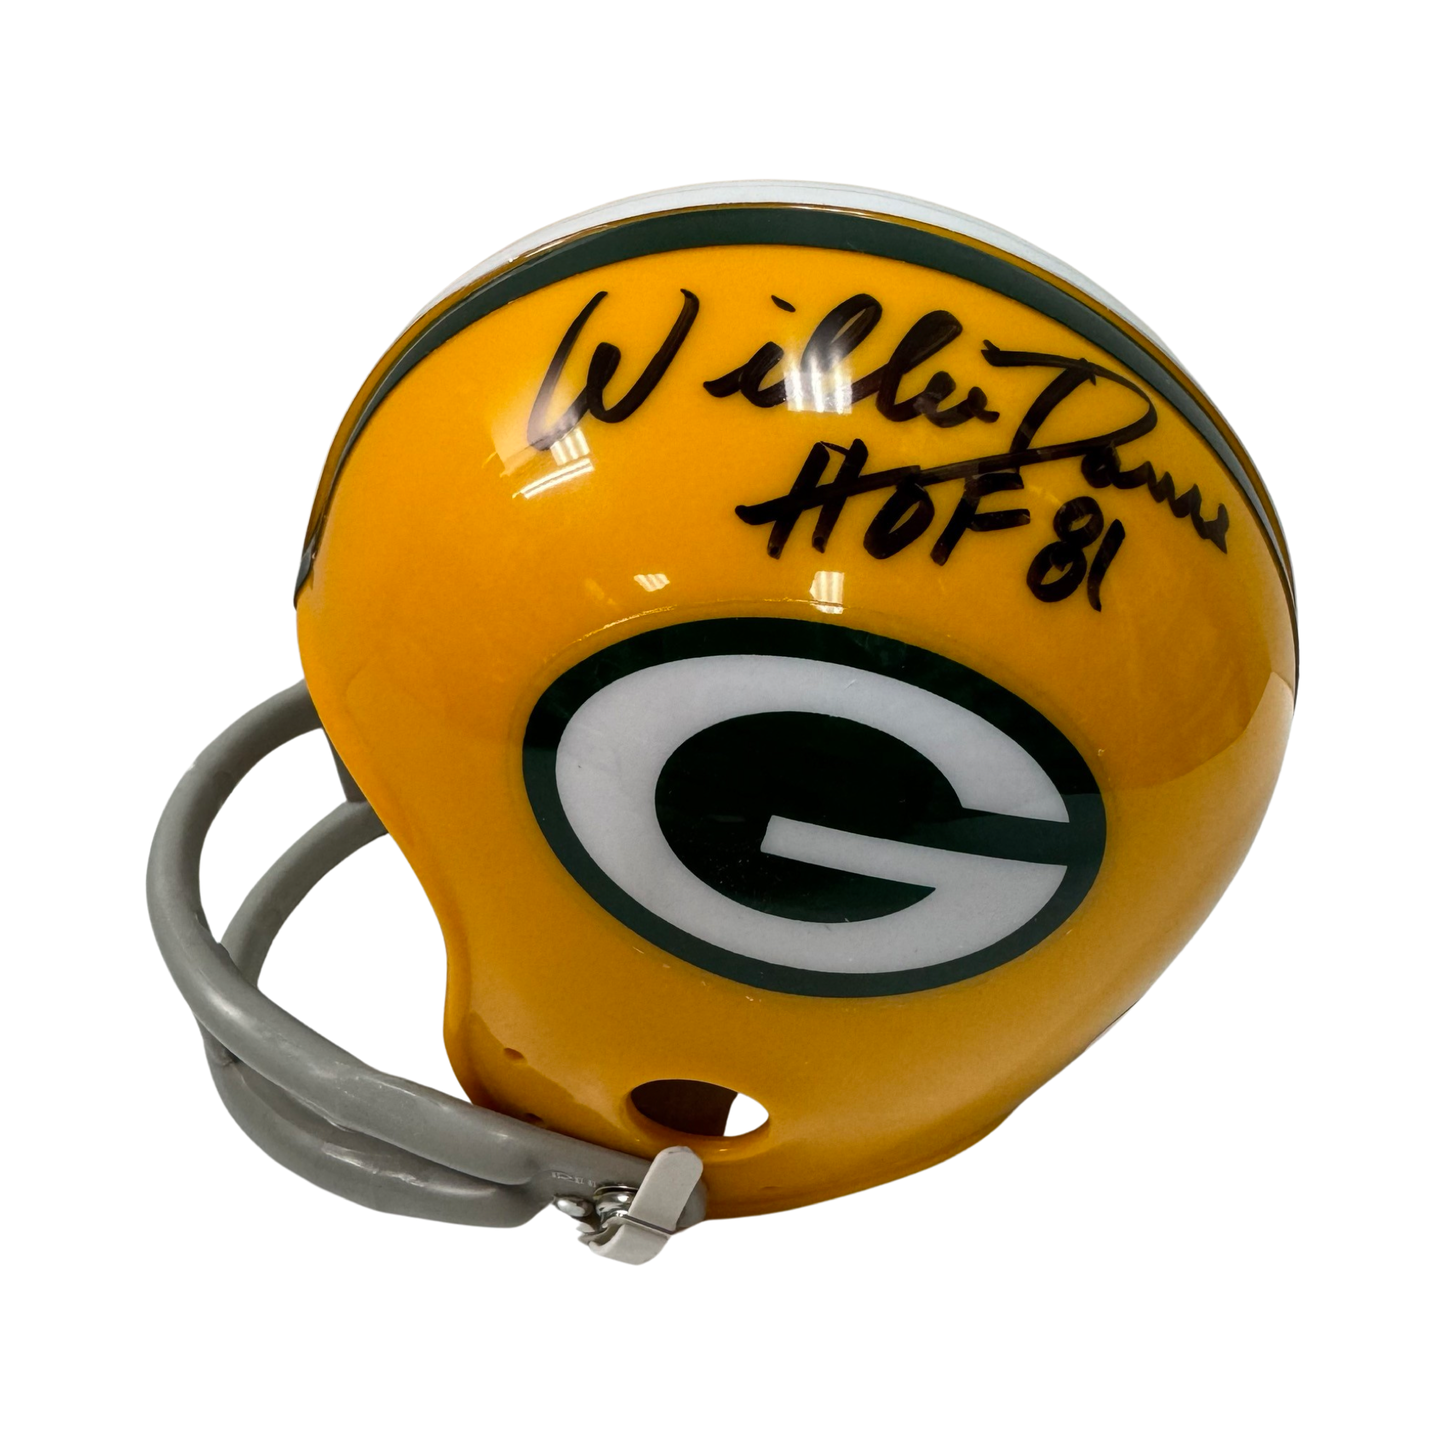 Willie Davis Autographed Green Bay Packers Mini Helmet “HOF 81” Inscription JSA